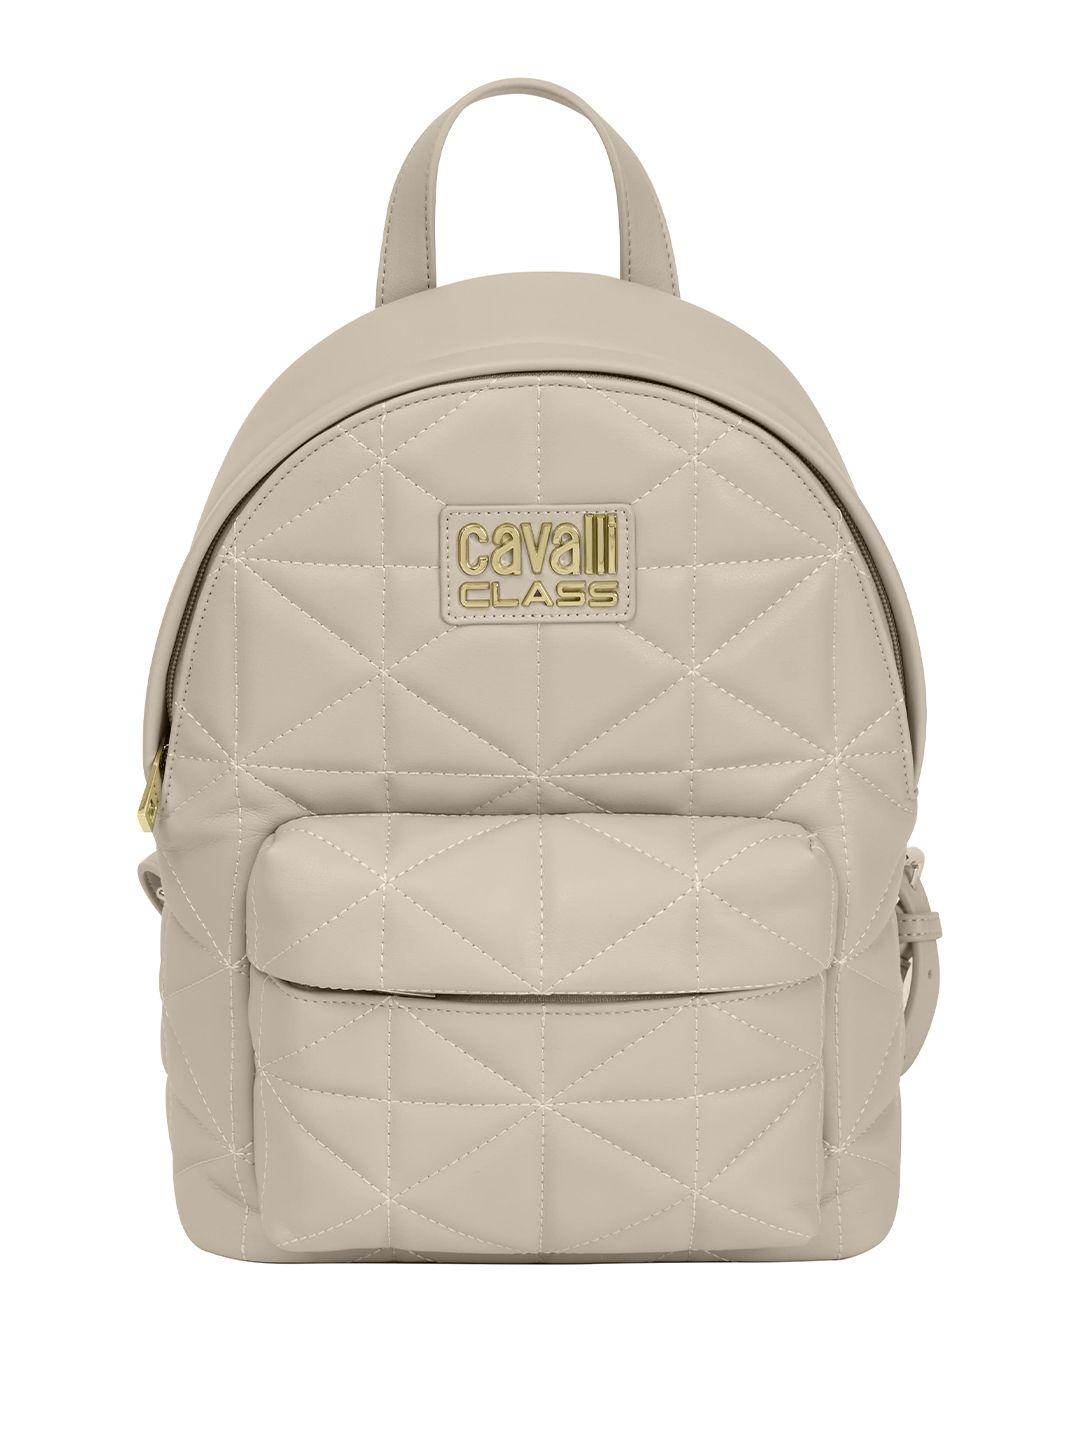 cavalli class women graphic backpack